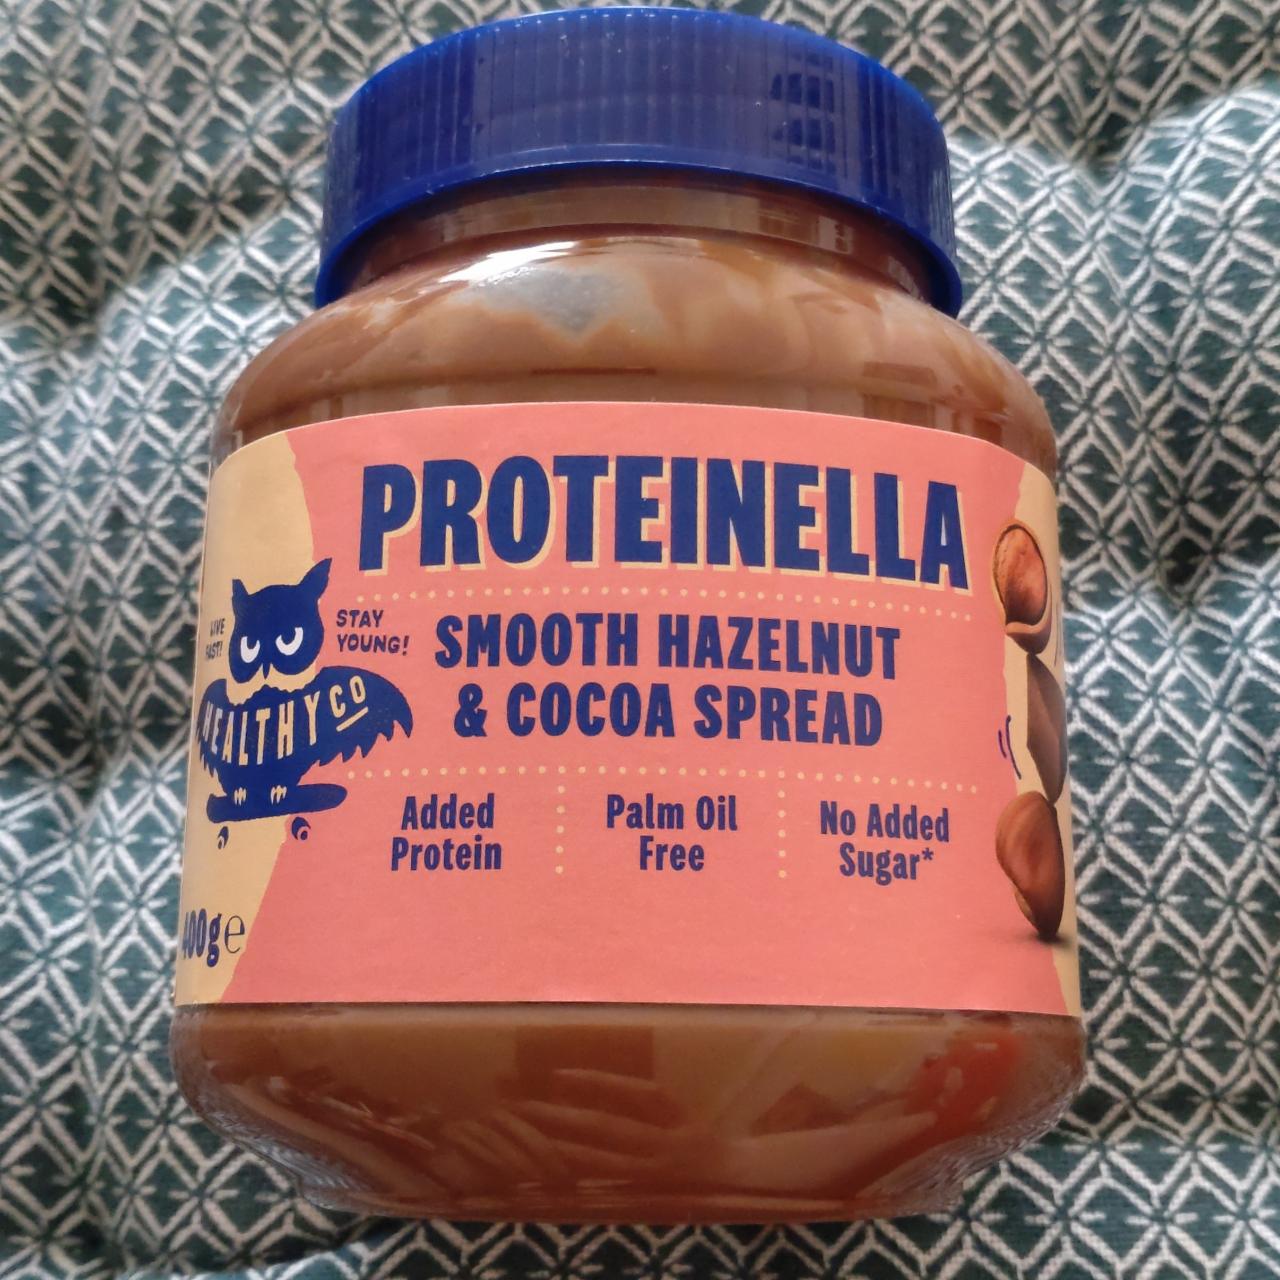 Fotografie - Proteinella Smooth Hazelnut & Cocoa Spread Healthy Co